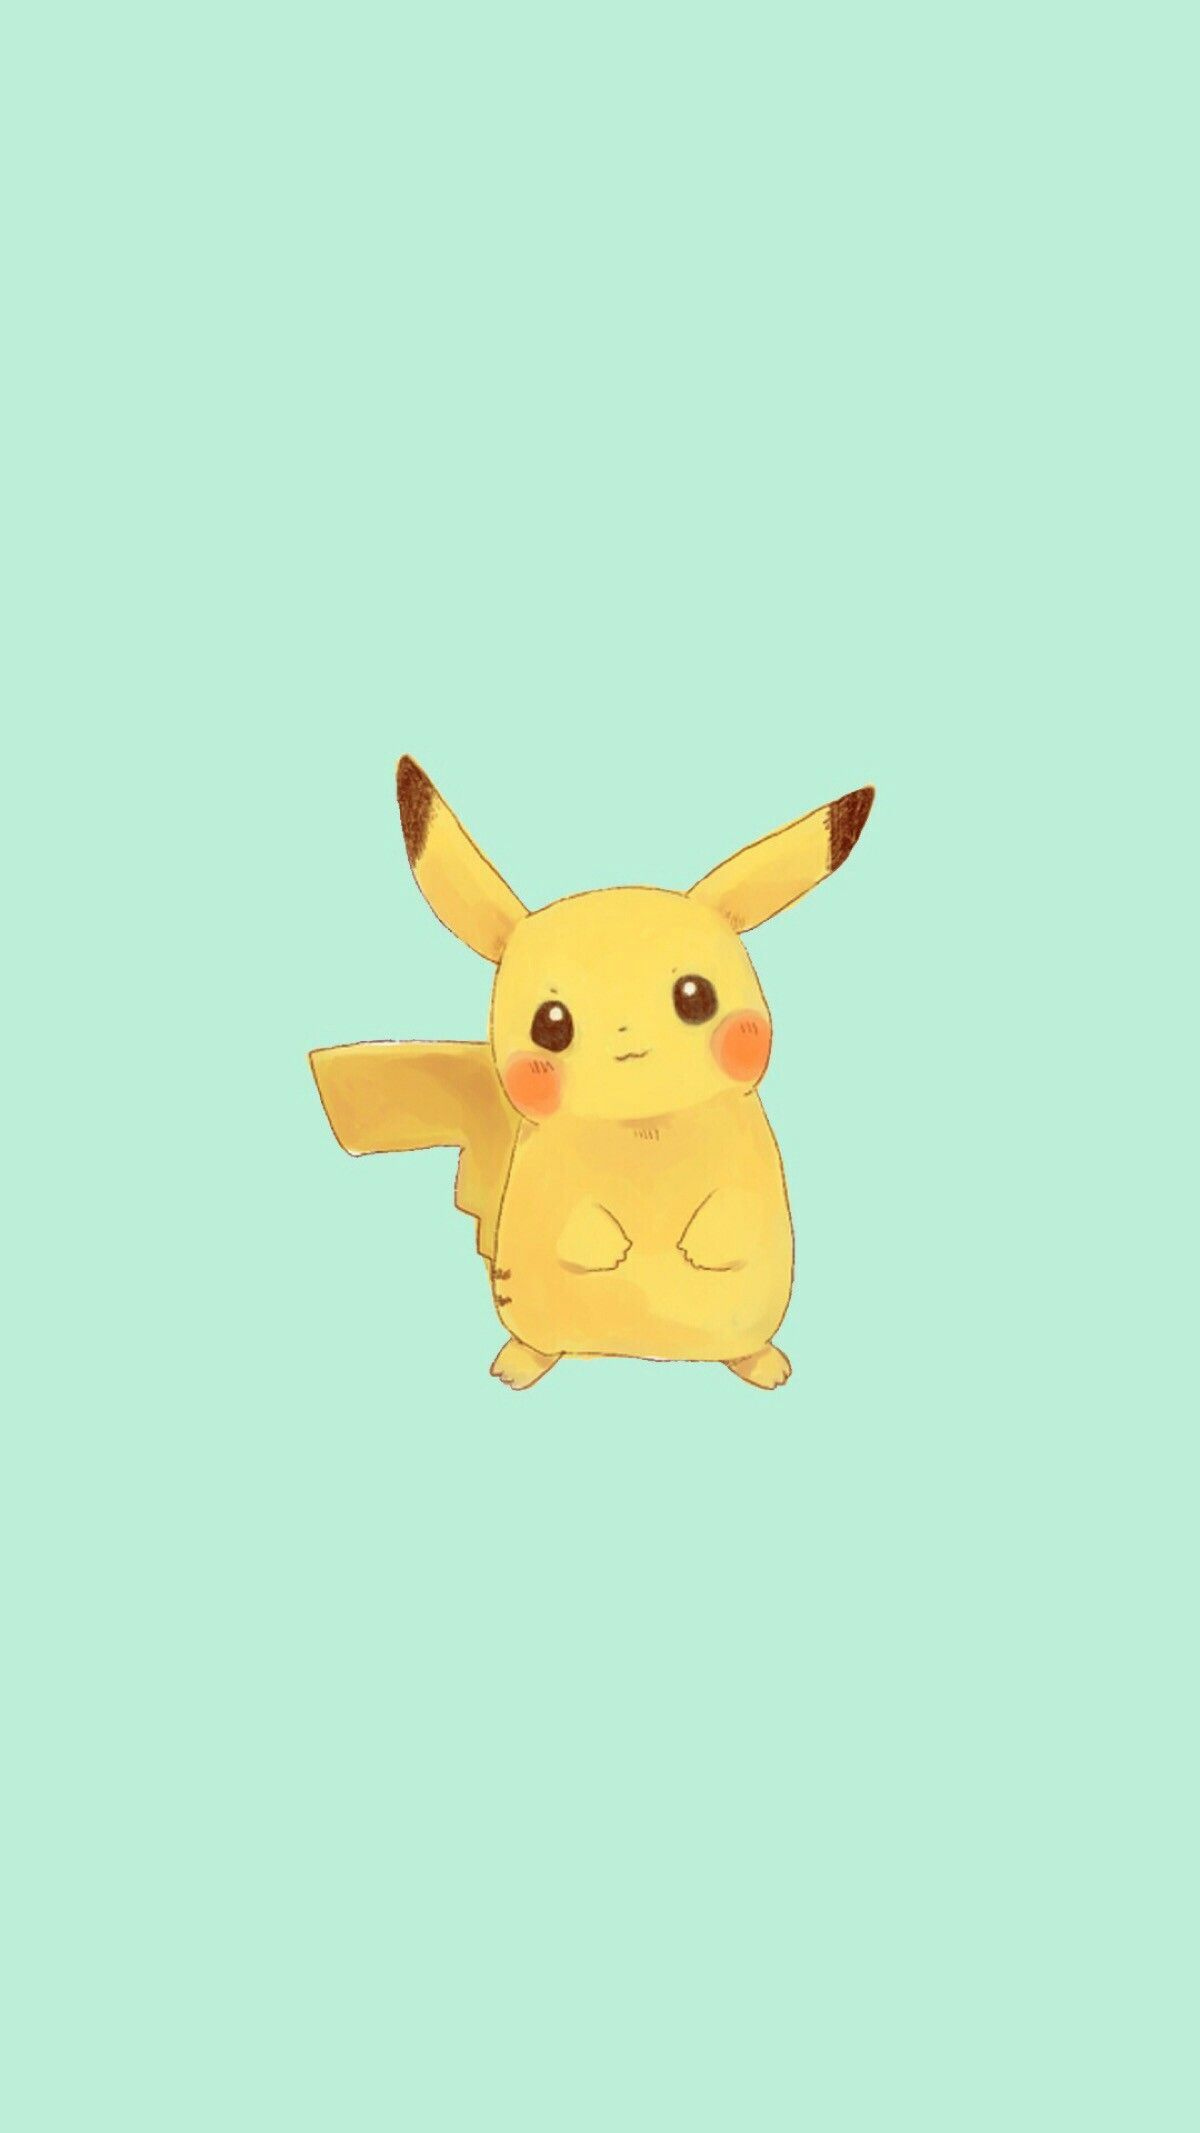 Cute Pikachu | Adorable Cartoon